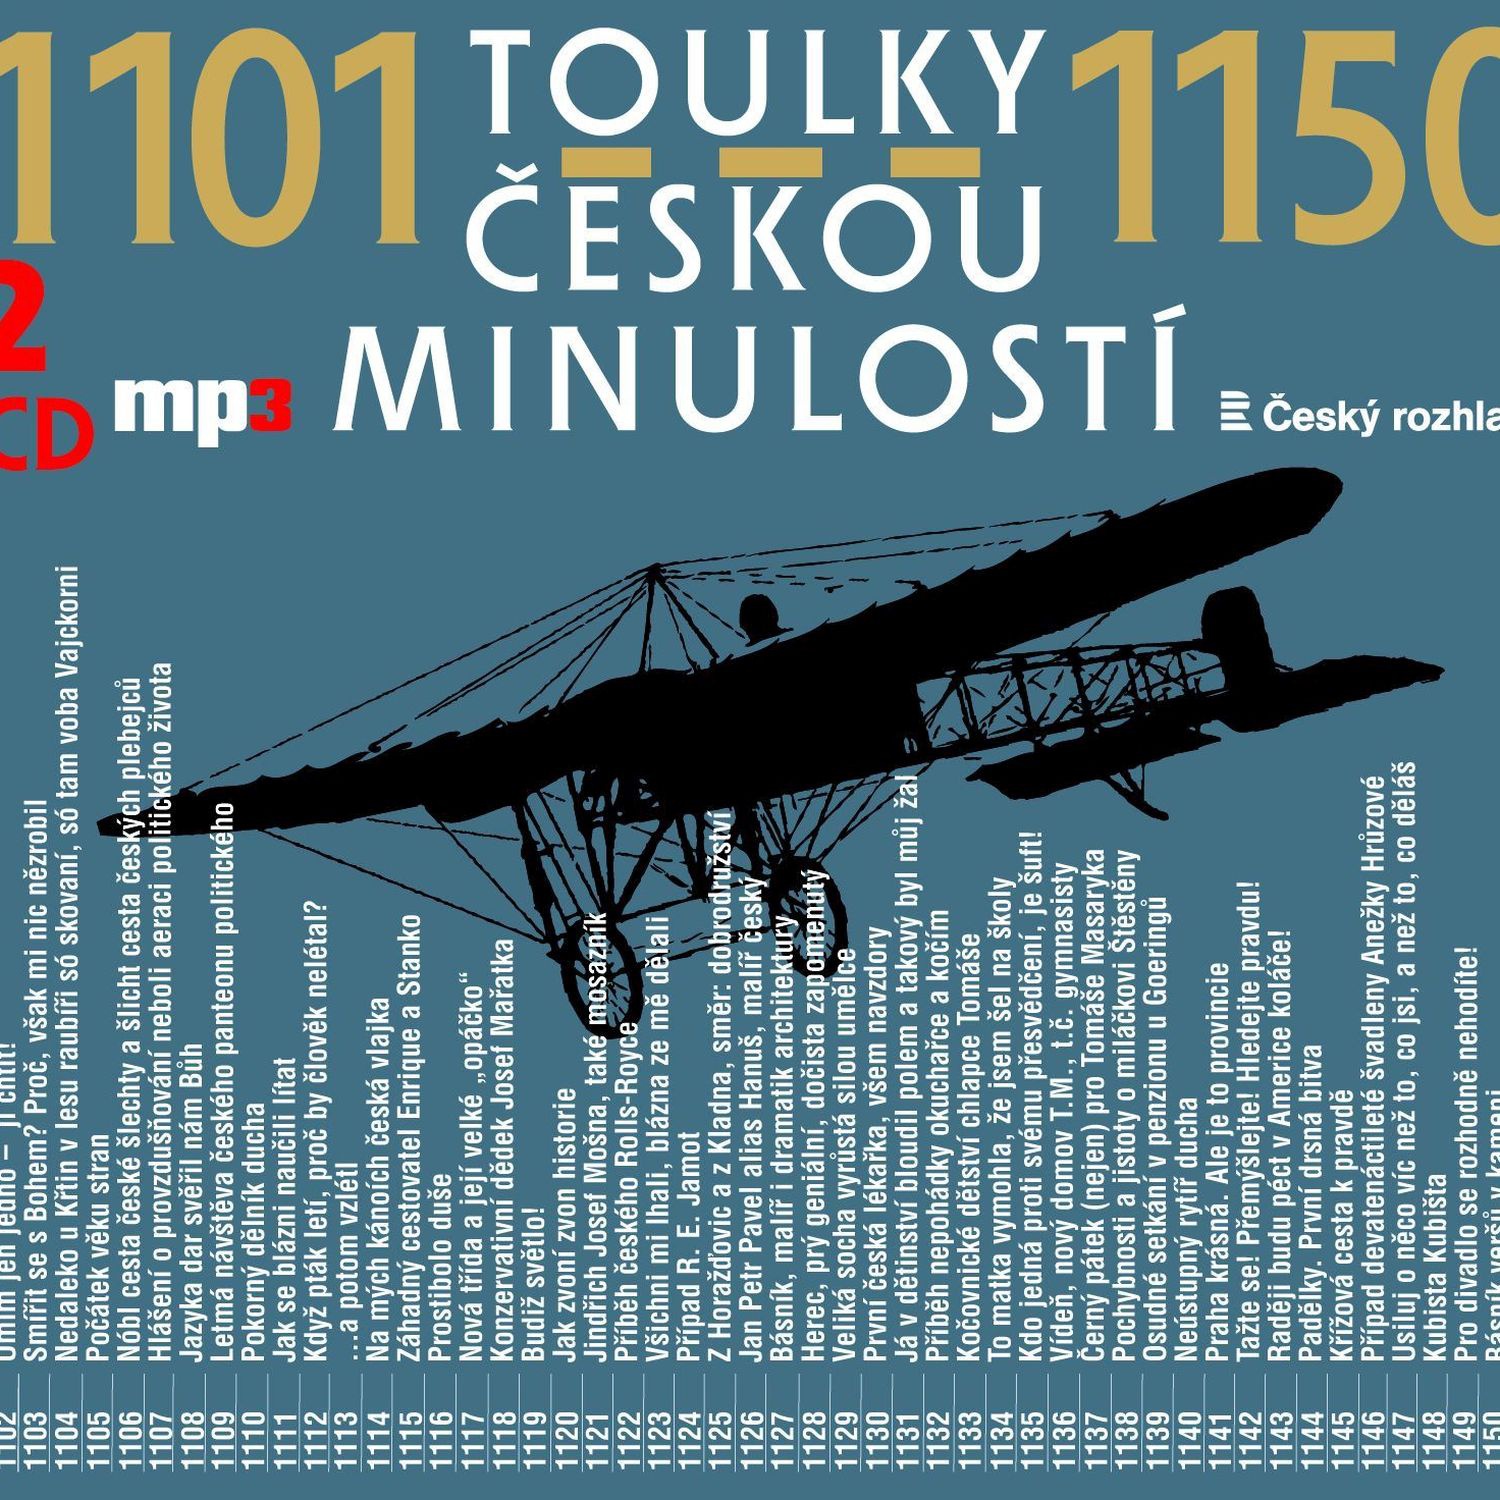 CD Shop - VARIOUS TOULKY CESKOU MINULOSTI 1101-1150 (MP3 CD)